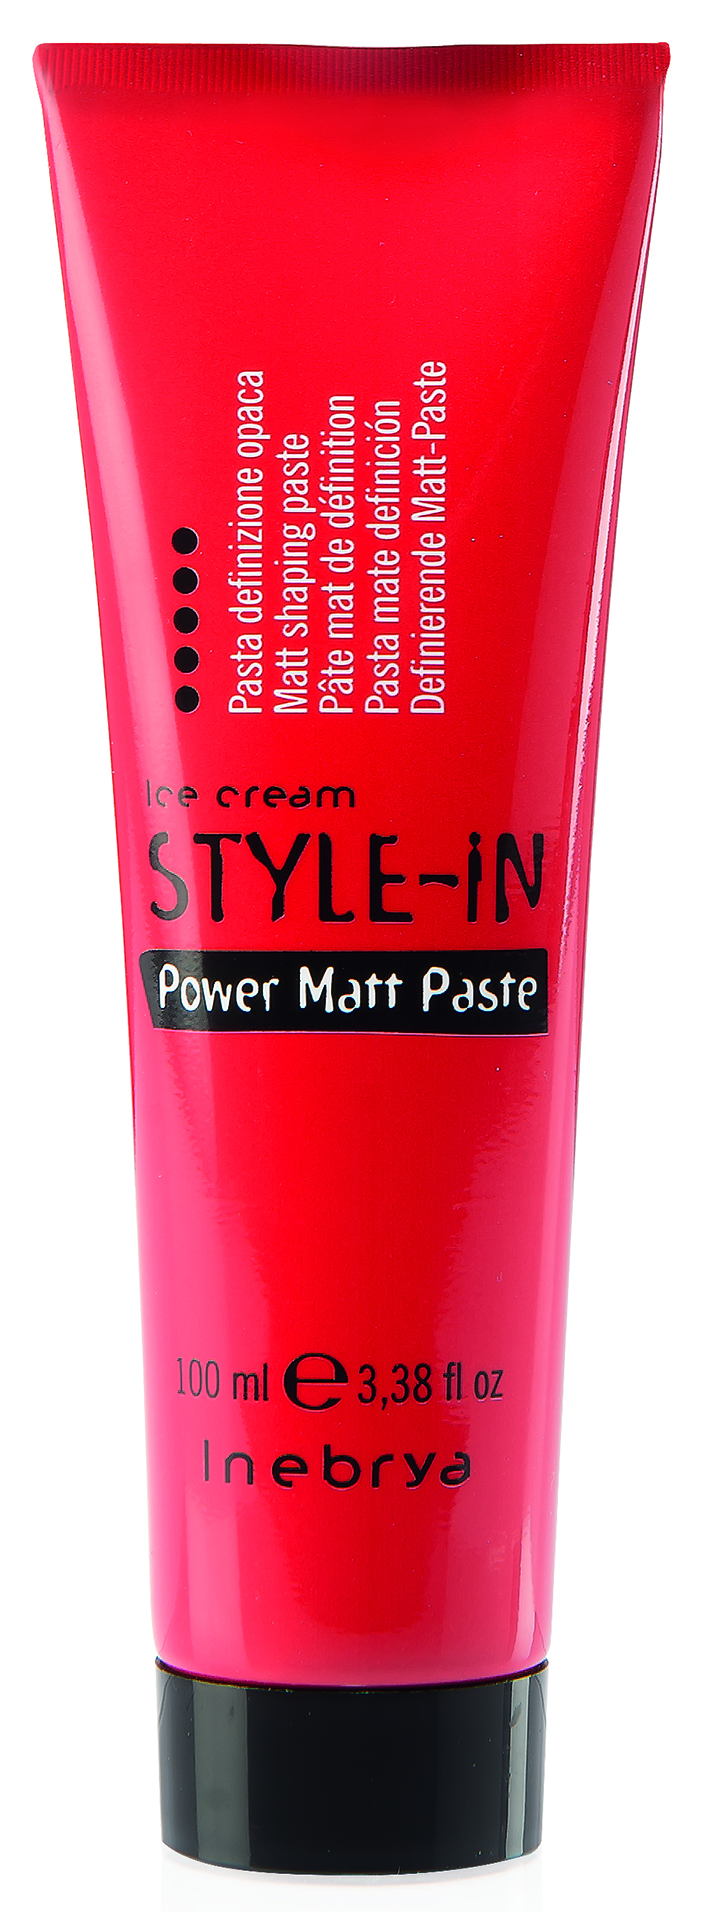 Style in Power Matt Paste, 100 ml